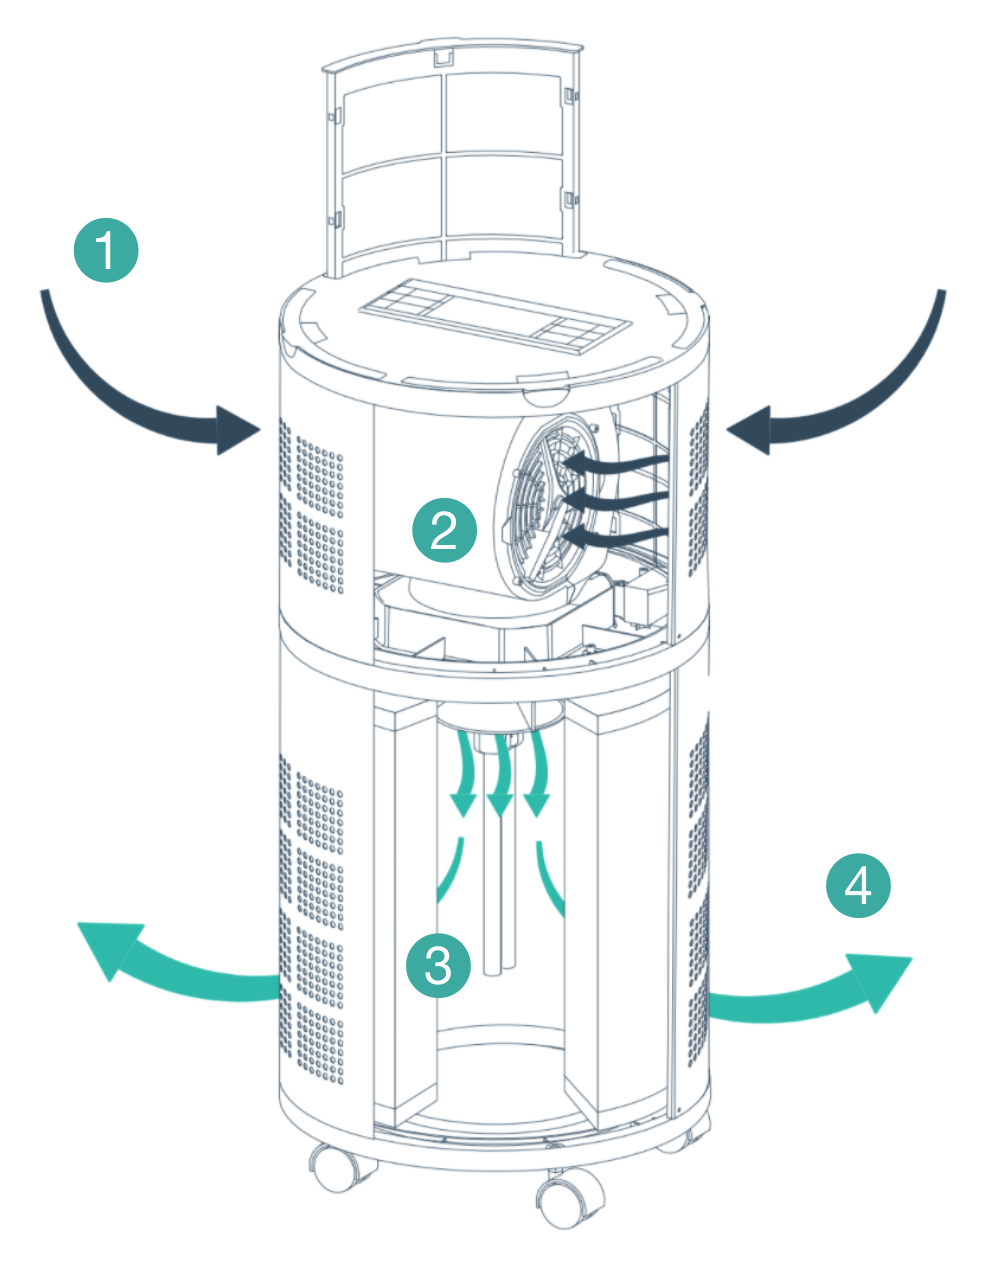 How the rensair air purifier technology works